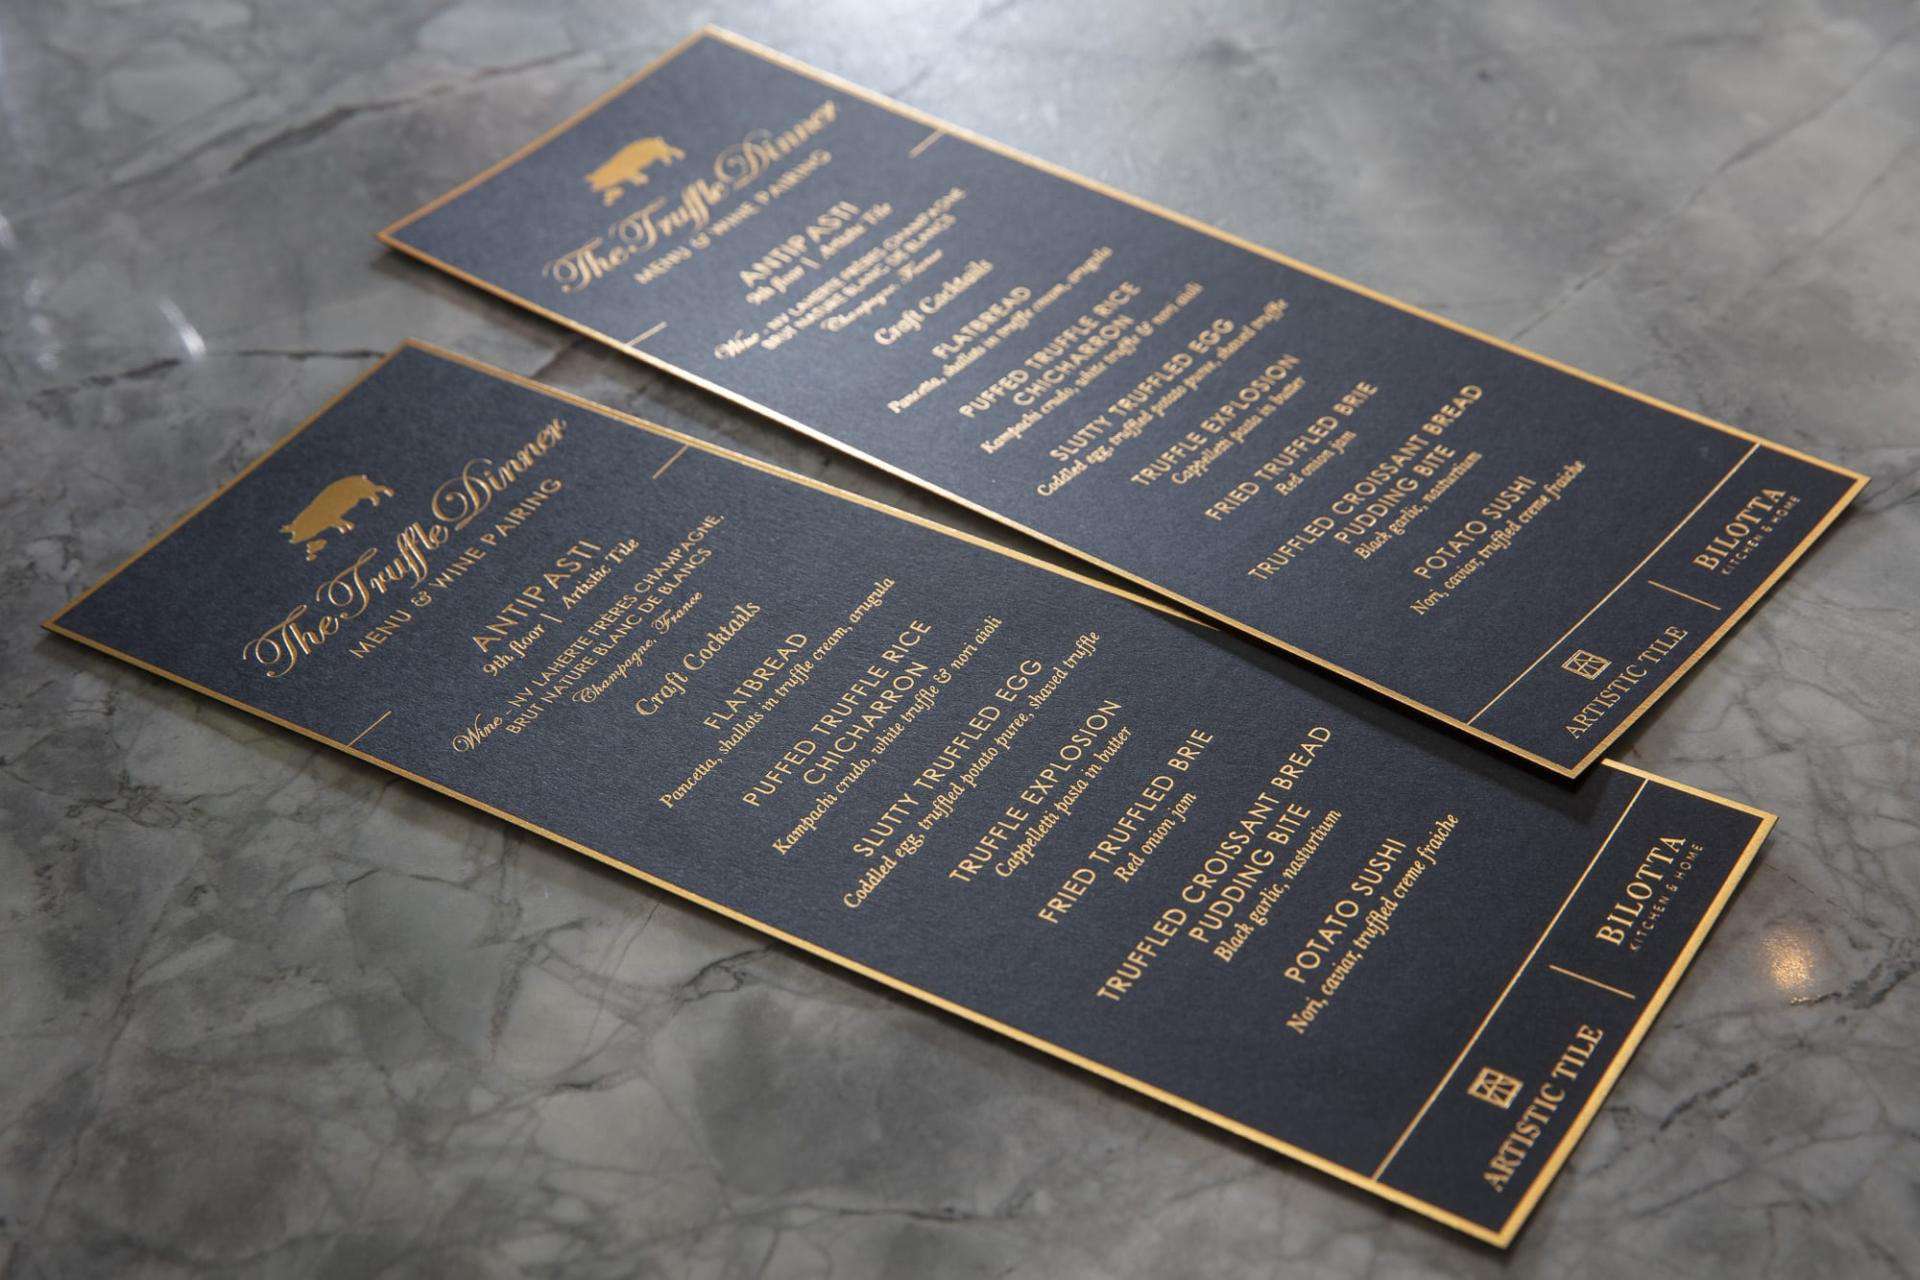 Printed menus at Bilotta truffle dinner